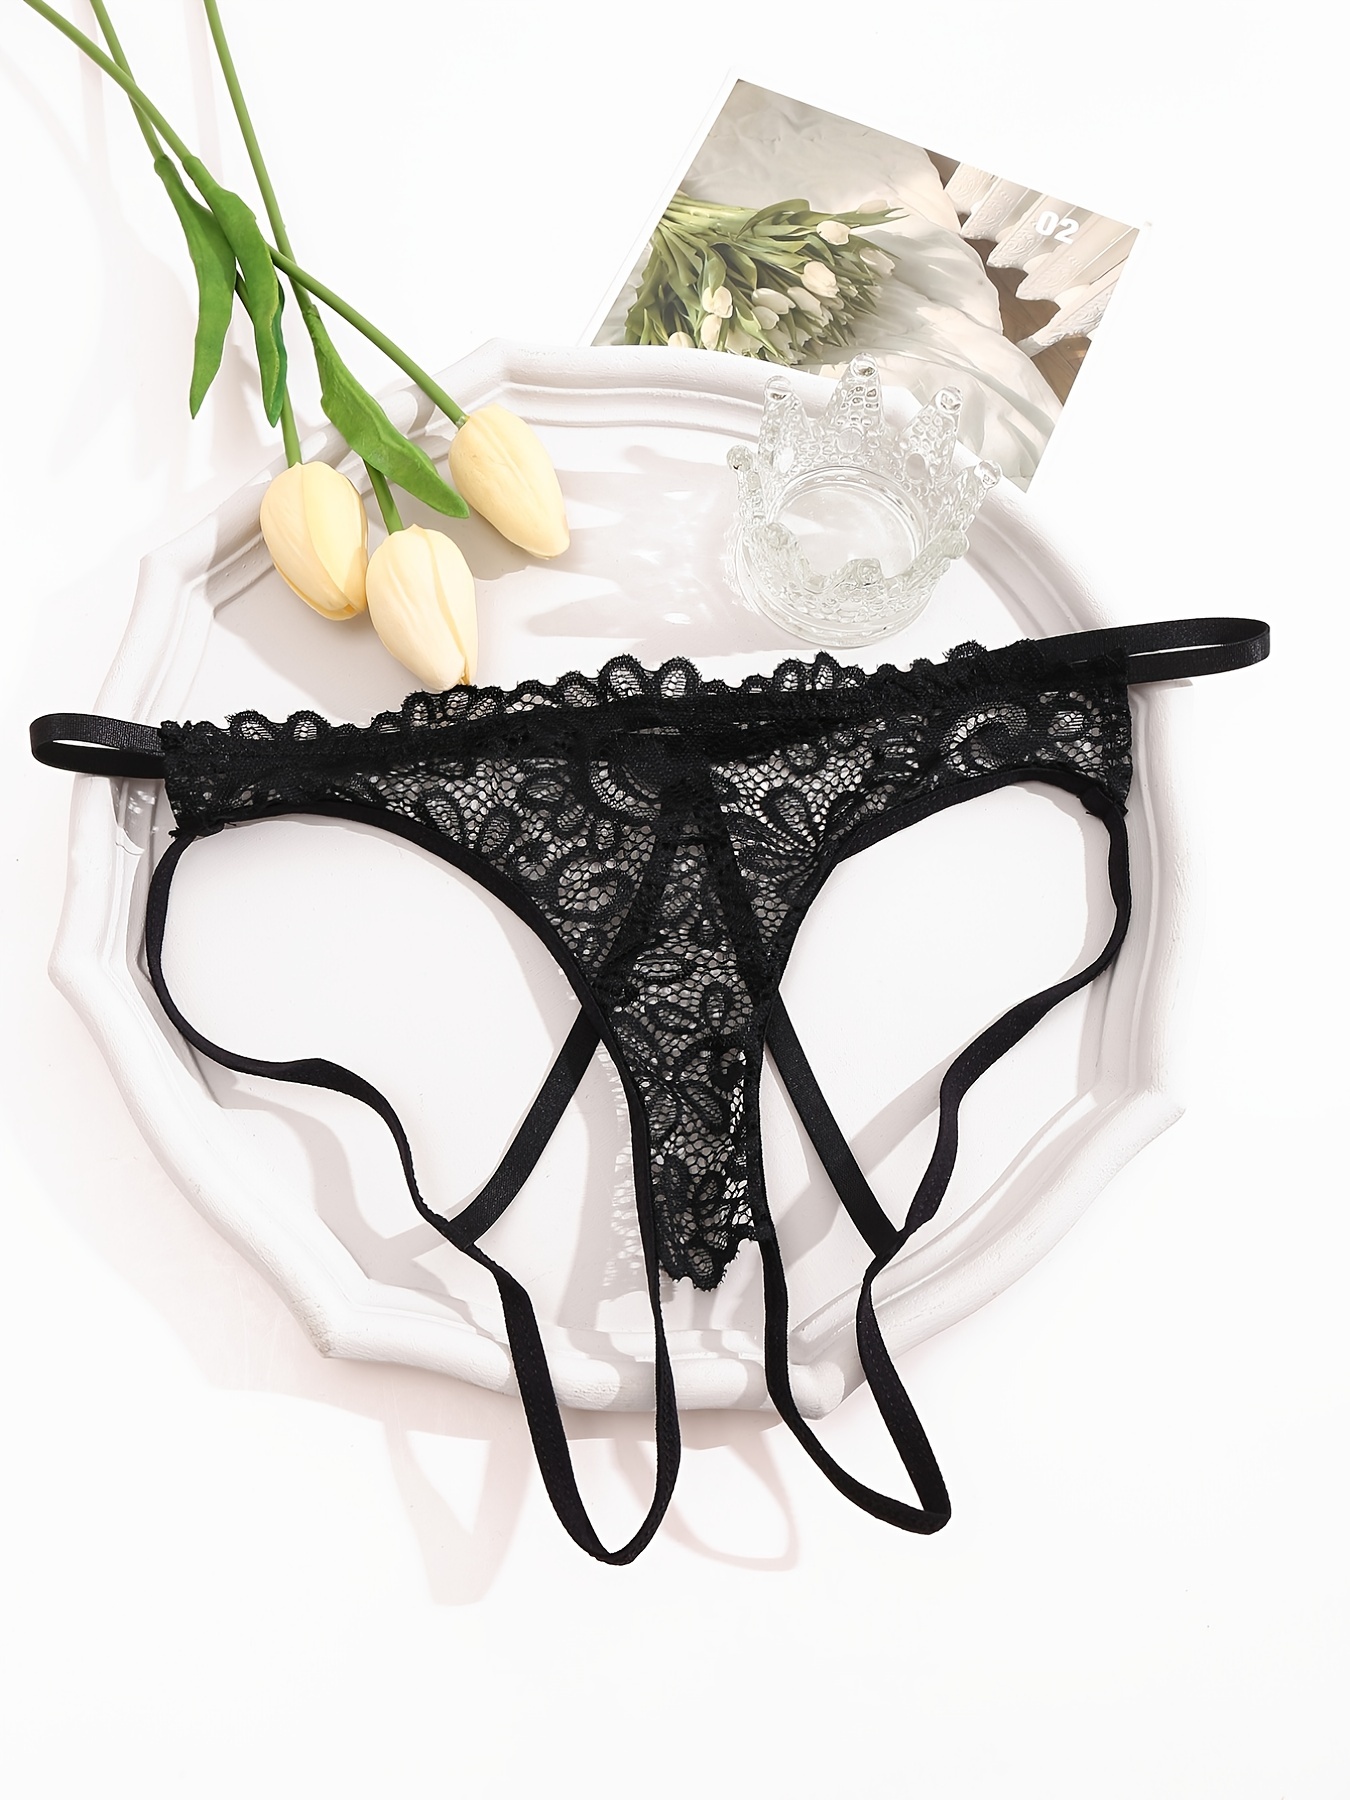 Women Panties Sexy Lace Low Waist Underwear Thong G String